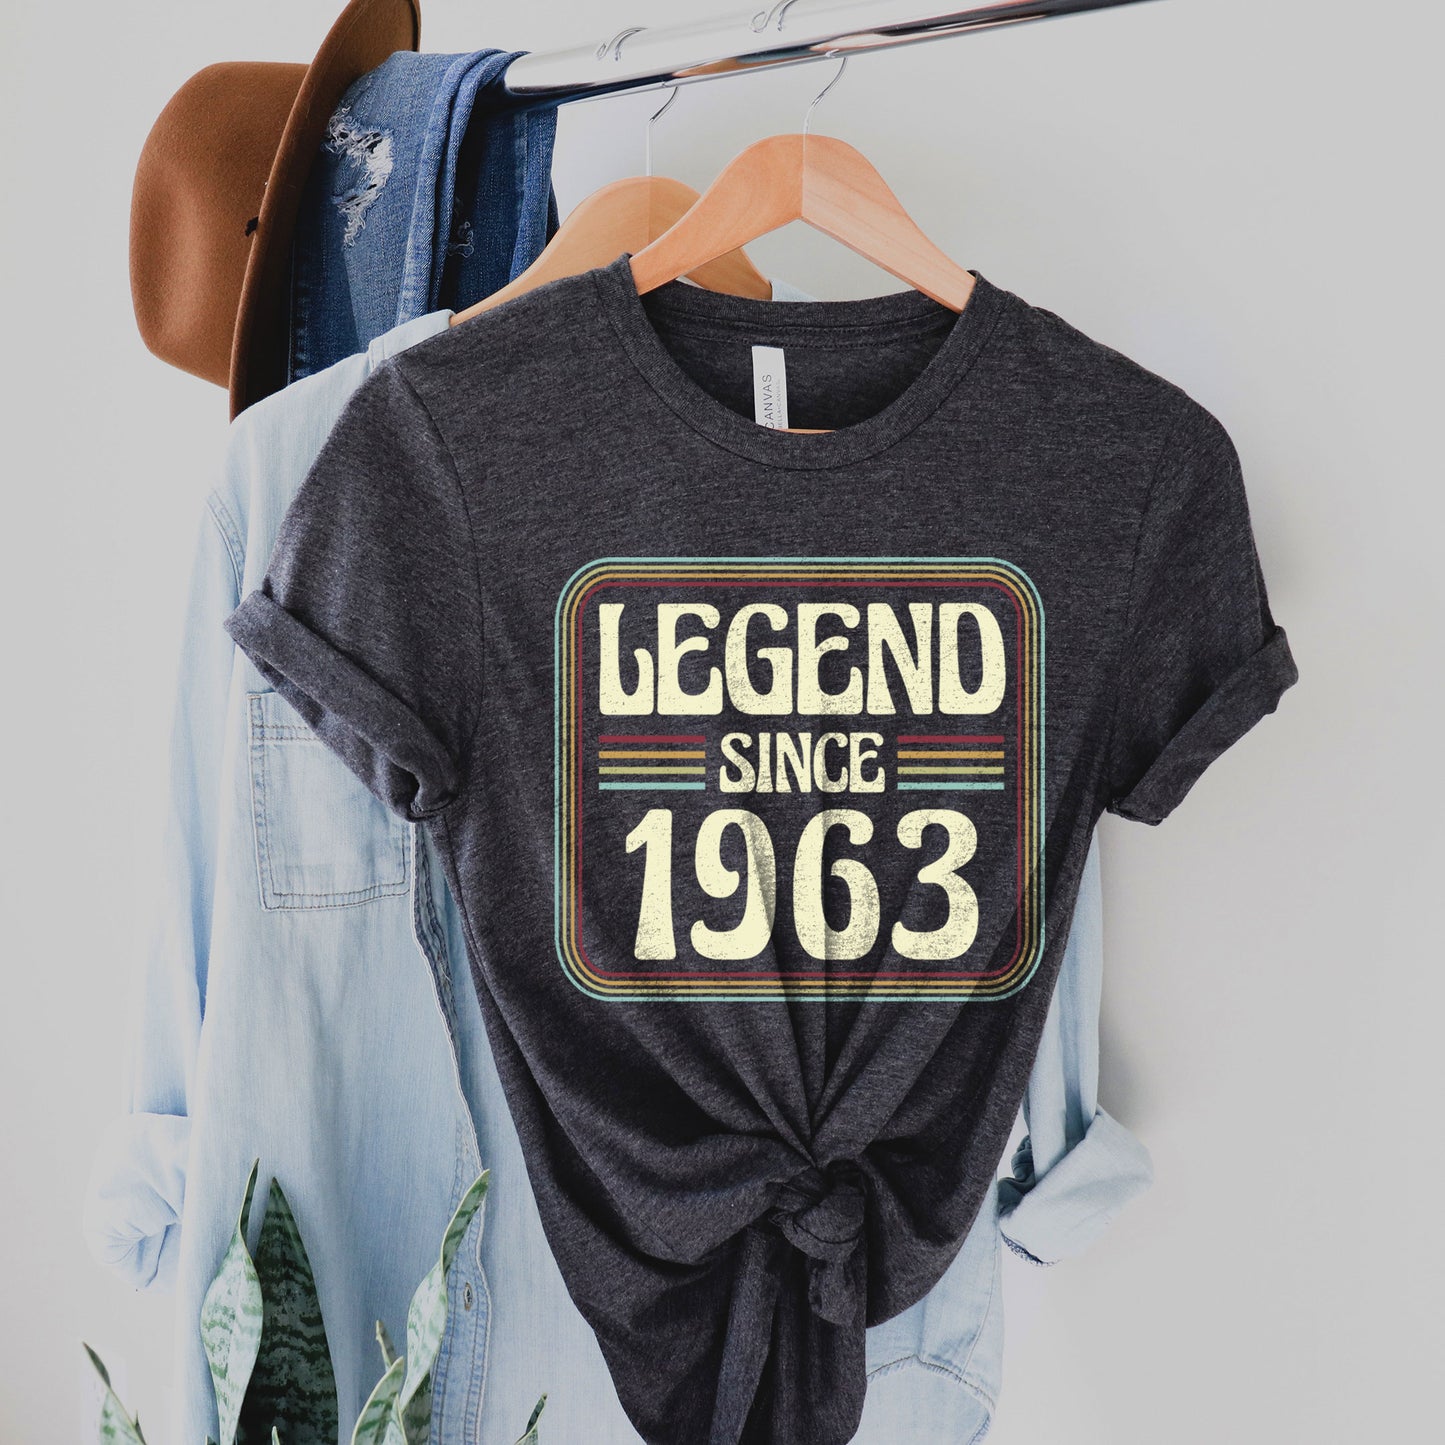 Legend Since 1962 Shirt, Born in 1962 Birthday Shirt, Vintage 1962 Shirt, 60th Birthday Idea, 1962 Birthday T-Shirt, 60th Birthday Gifts Tee